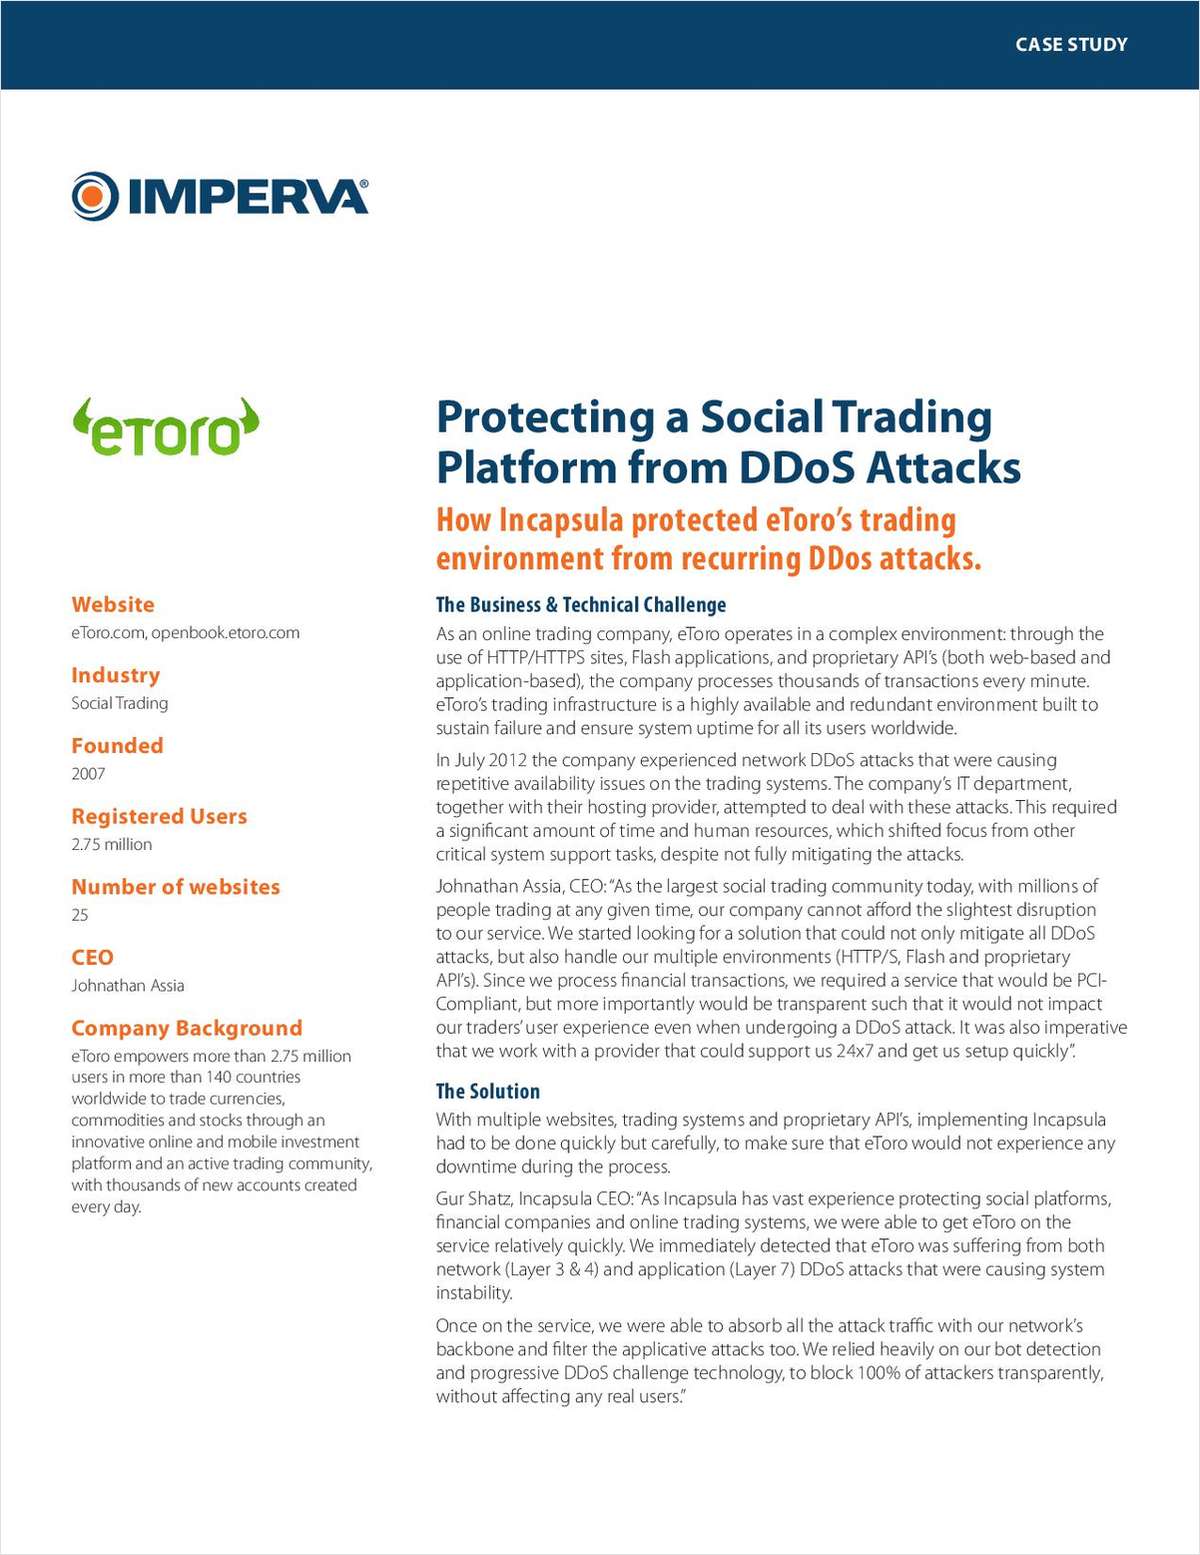 eToro Maximizes Availability of Its Online Trading Operations with Incapsula